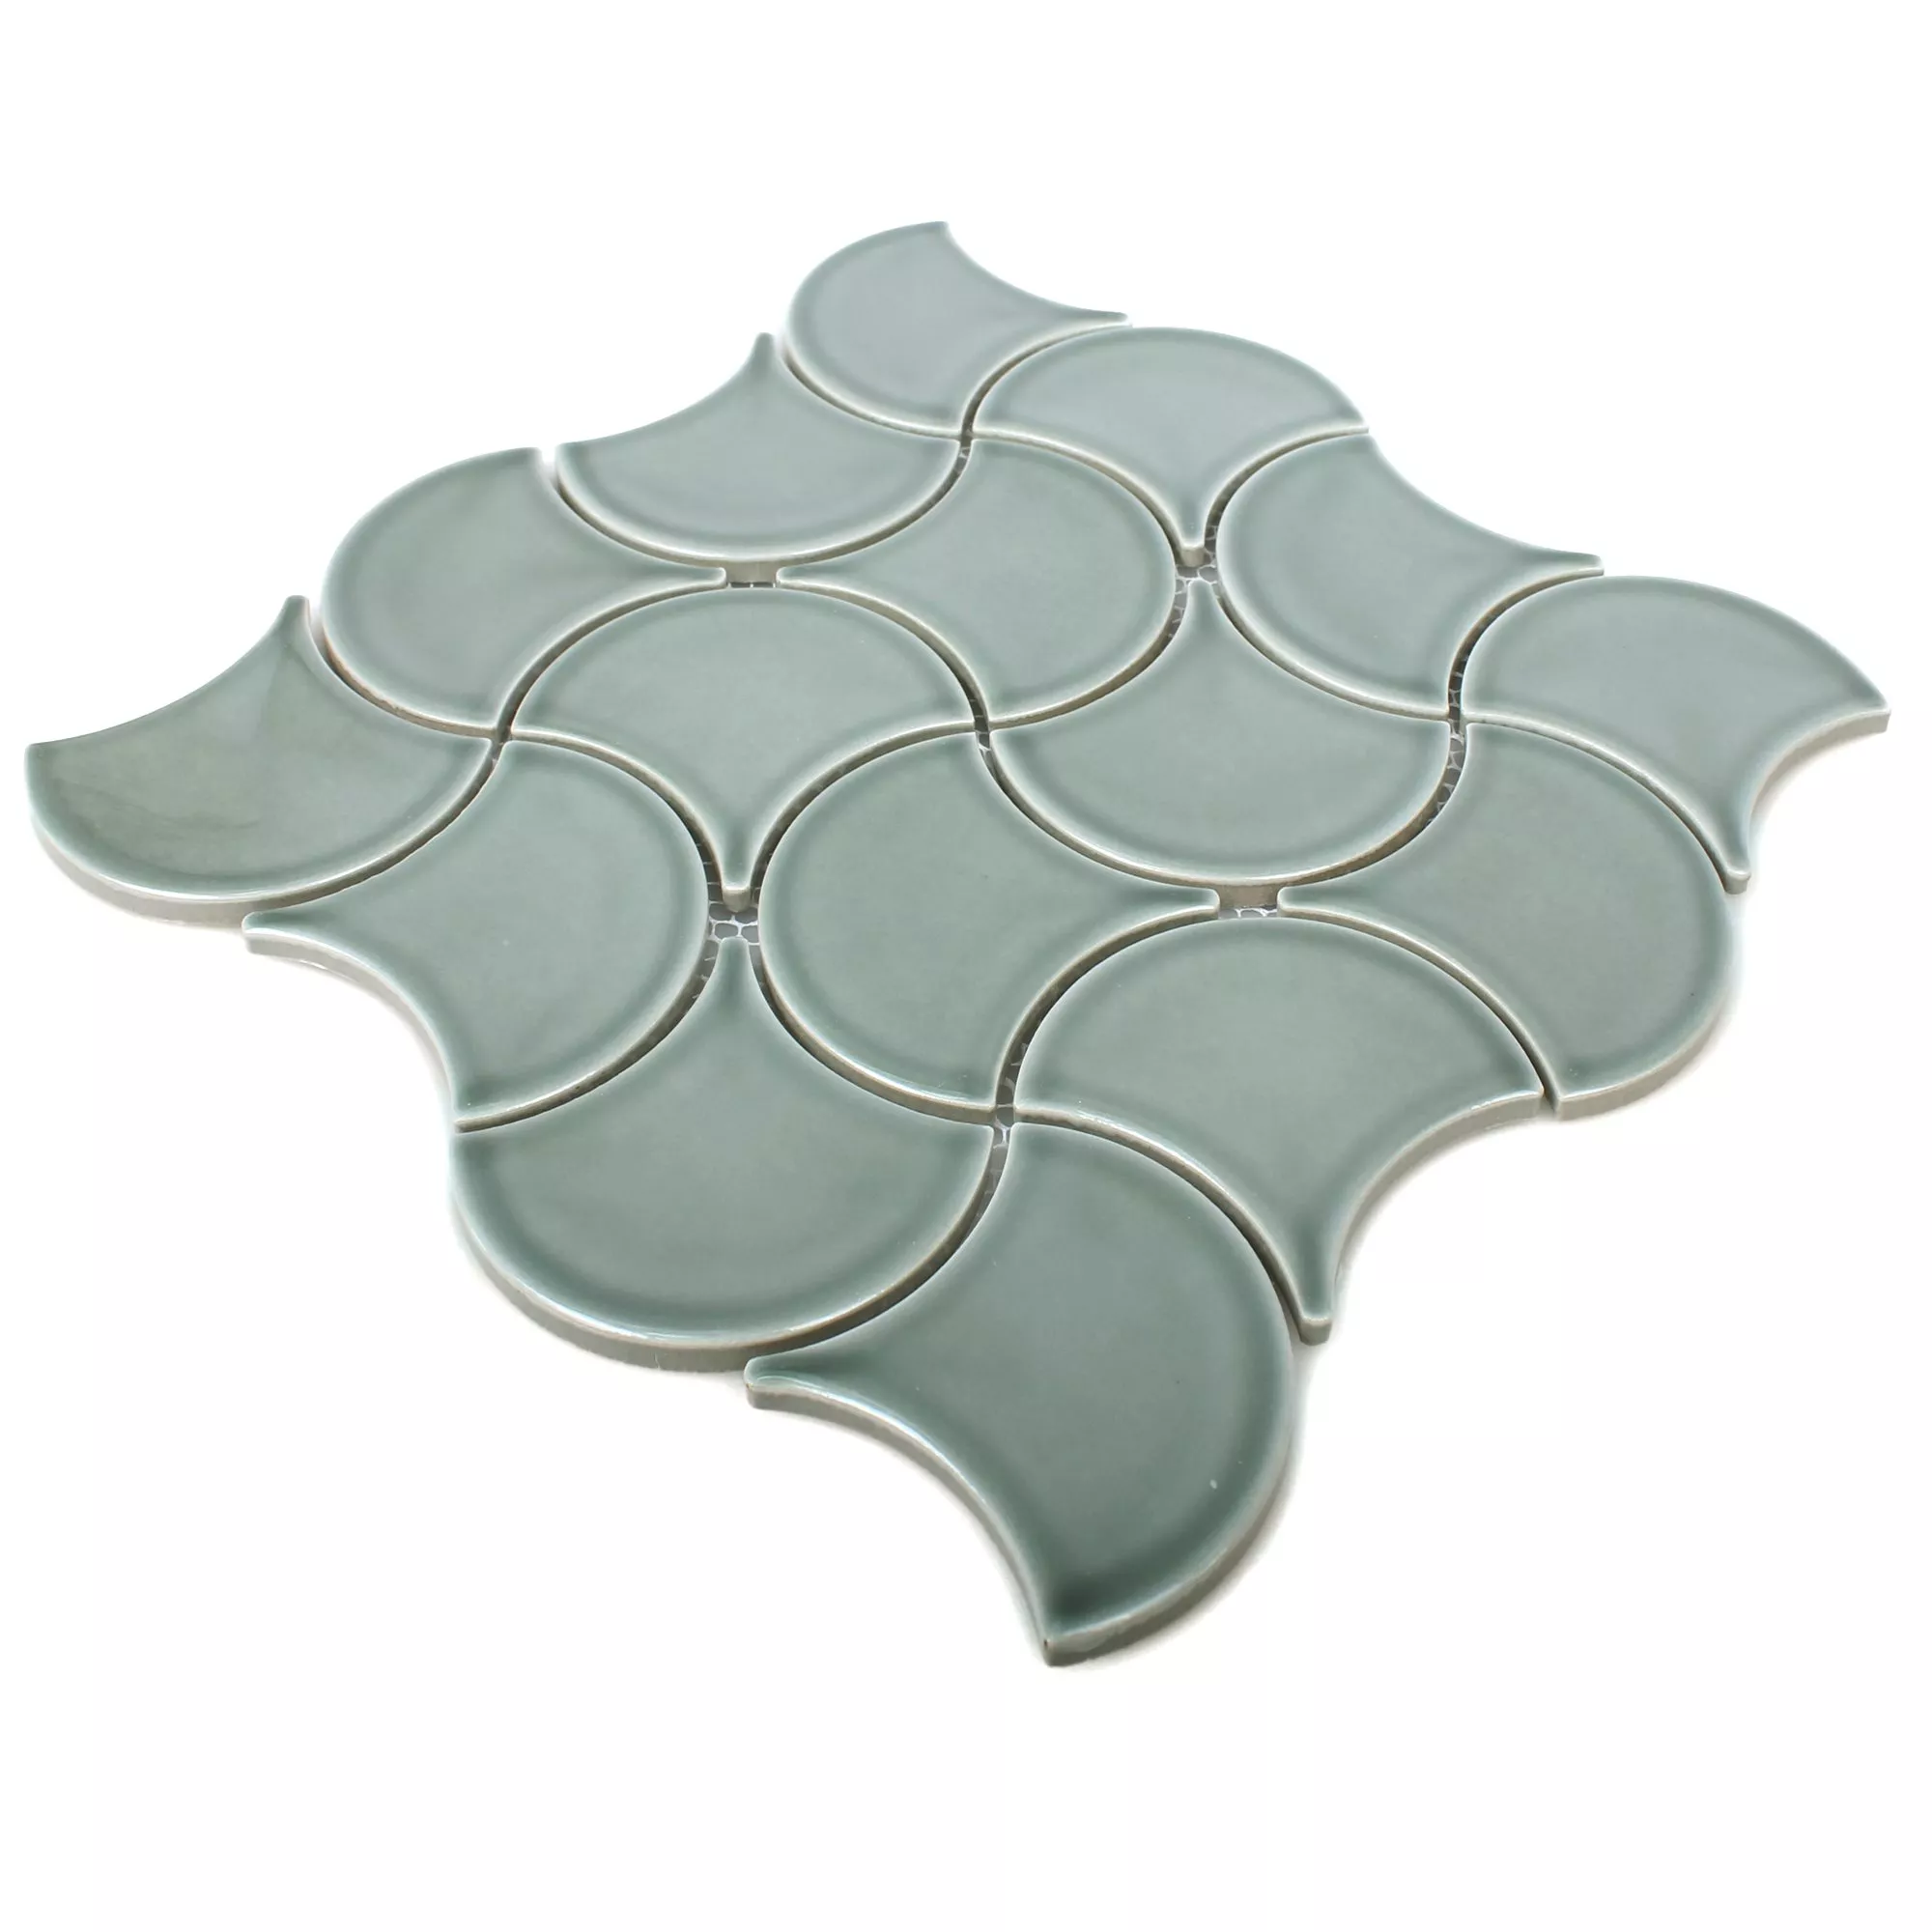 Sample Ceramic Mosaic Tiles Toledo Wave Green